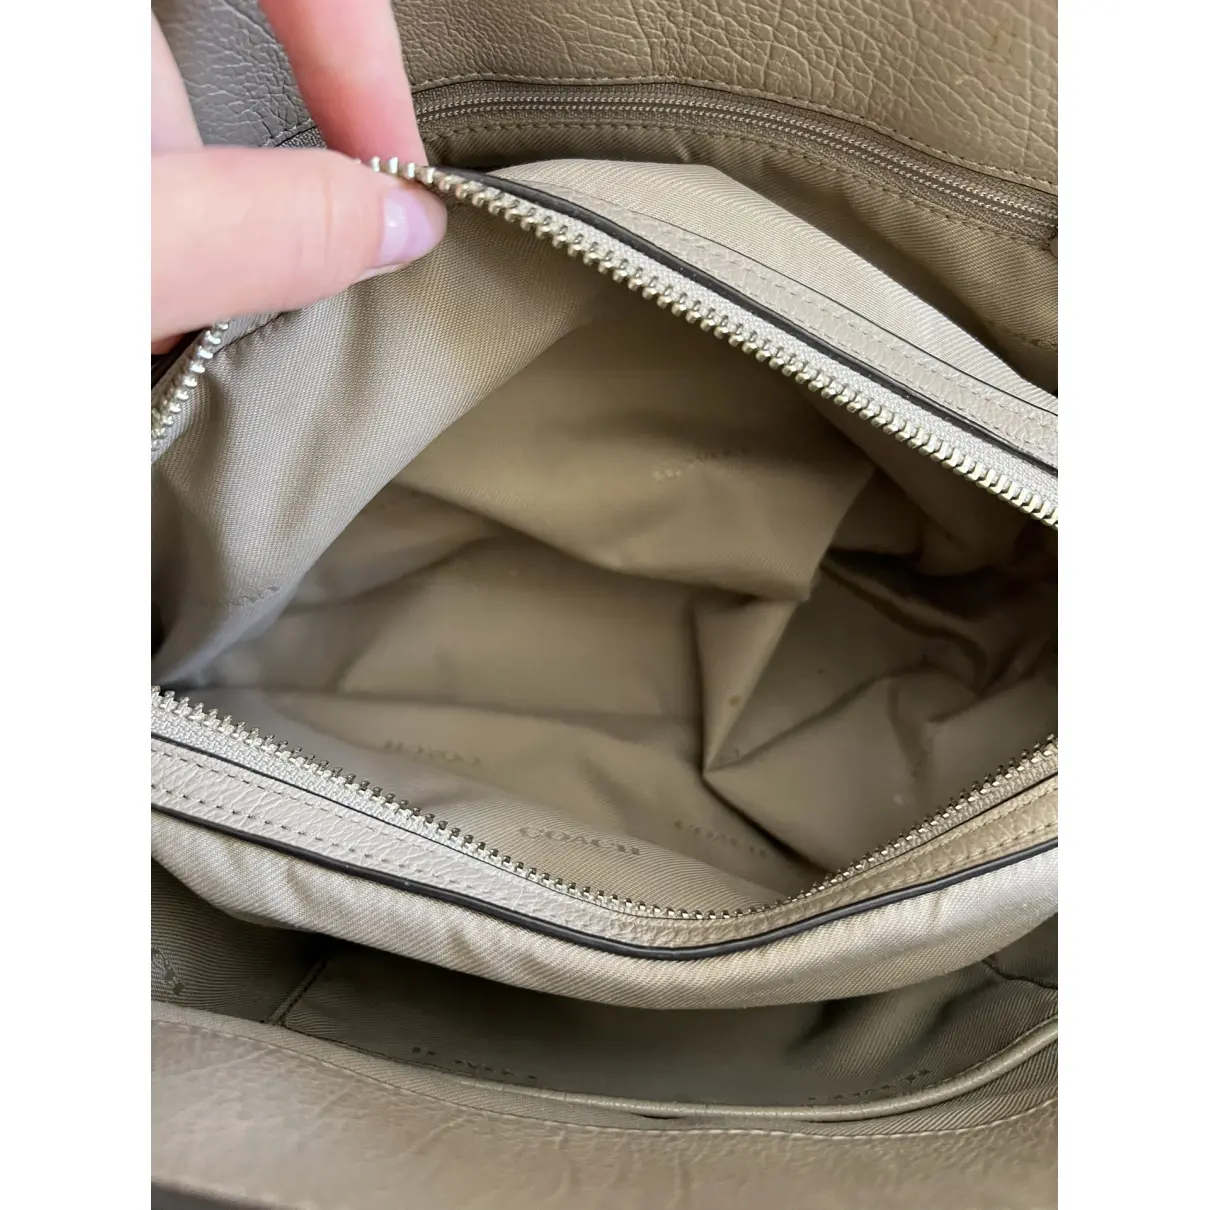 Mercer satchel 24 leather handbag Coach